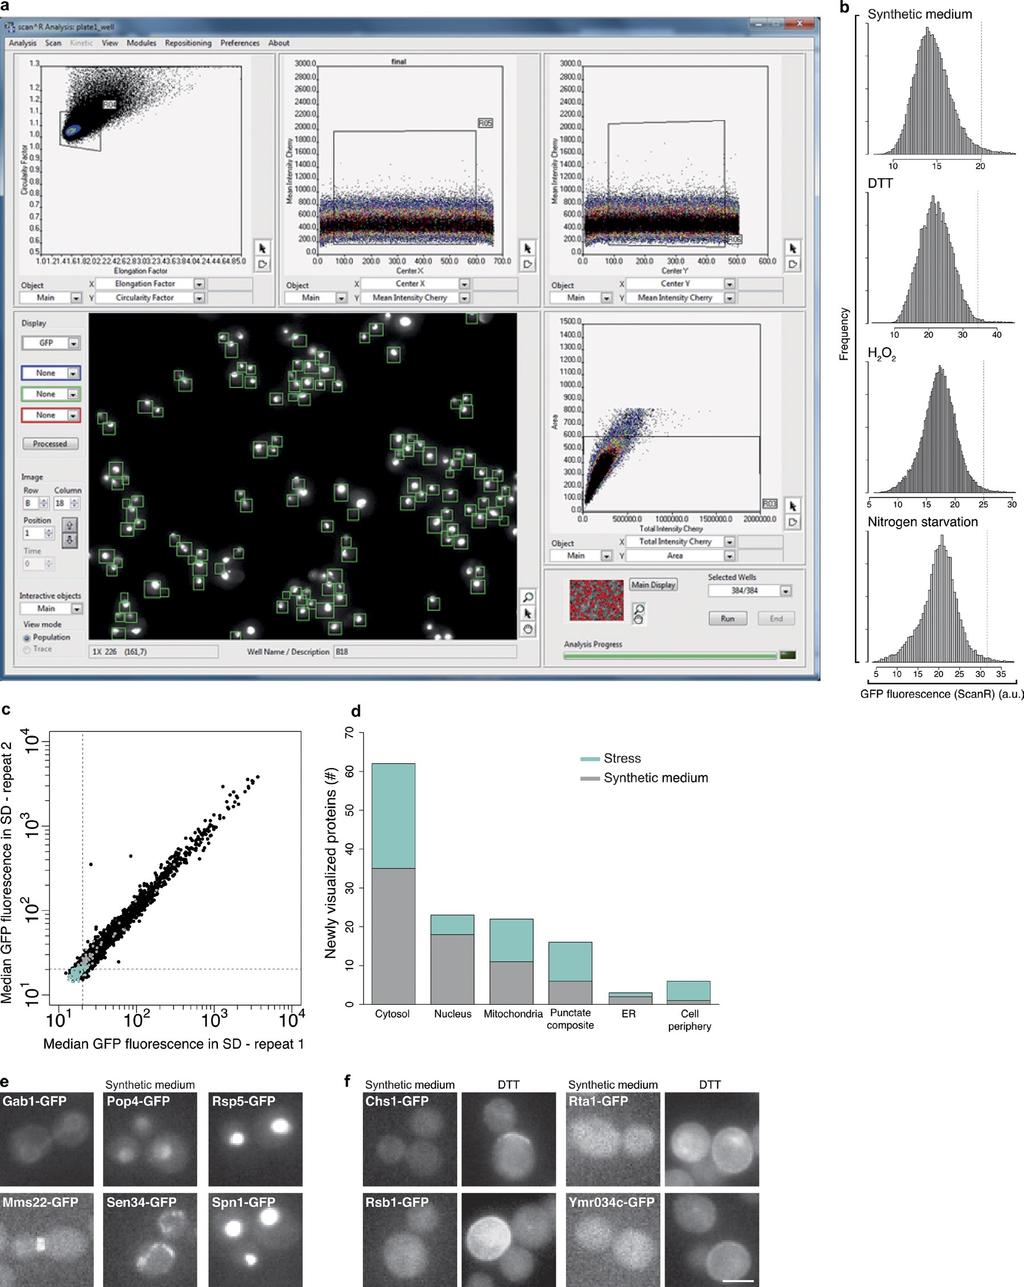 T H E J O U R N A L O F C E L L B I O L O G Y Supplemental material Breker et al., http://www.jcb.org/cgi/content/full/jcb.201301120/dc1 Figure S1. Single-cell proteomics of stress responses.